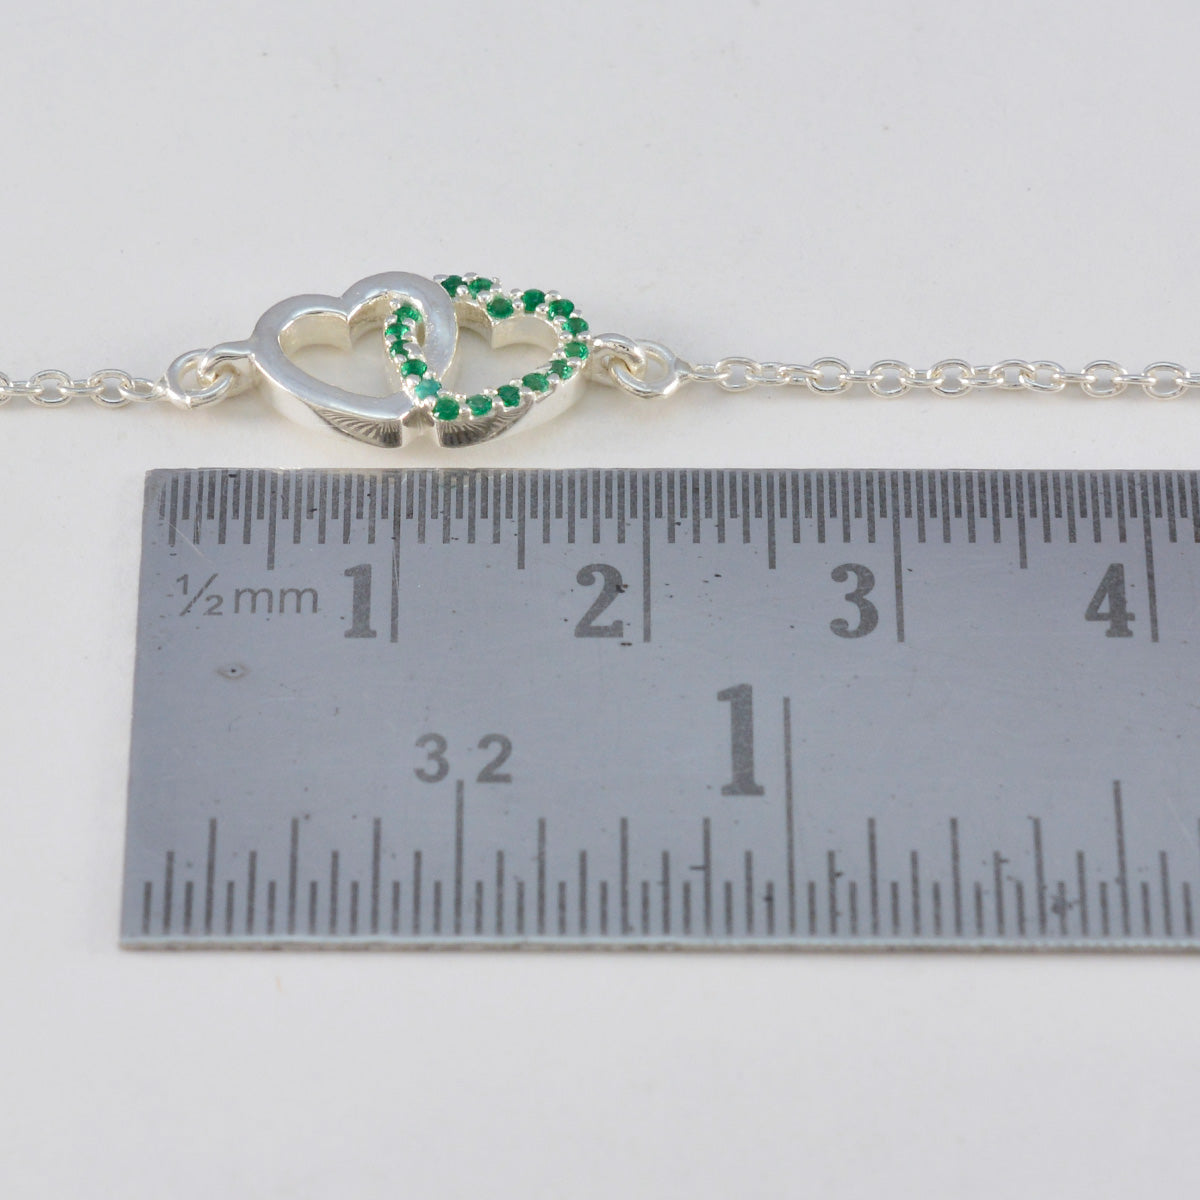 Riyo Großhandel 925 Sterling Silber Armband für Damen Smaragd CZ Armband Lünettenfassung Armband mit Federring Bettelarmband L Größe 6-8,5 Zoll.